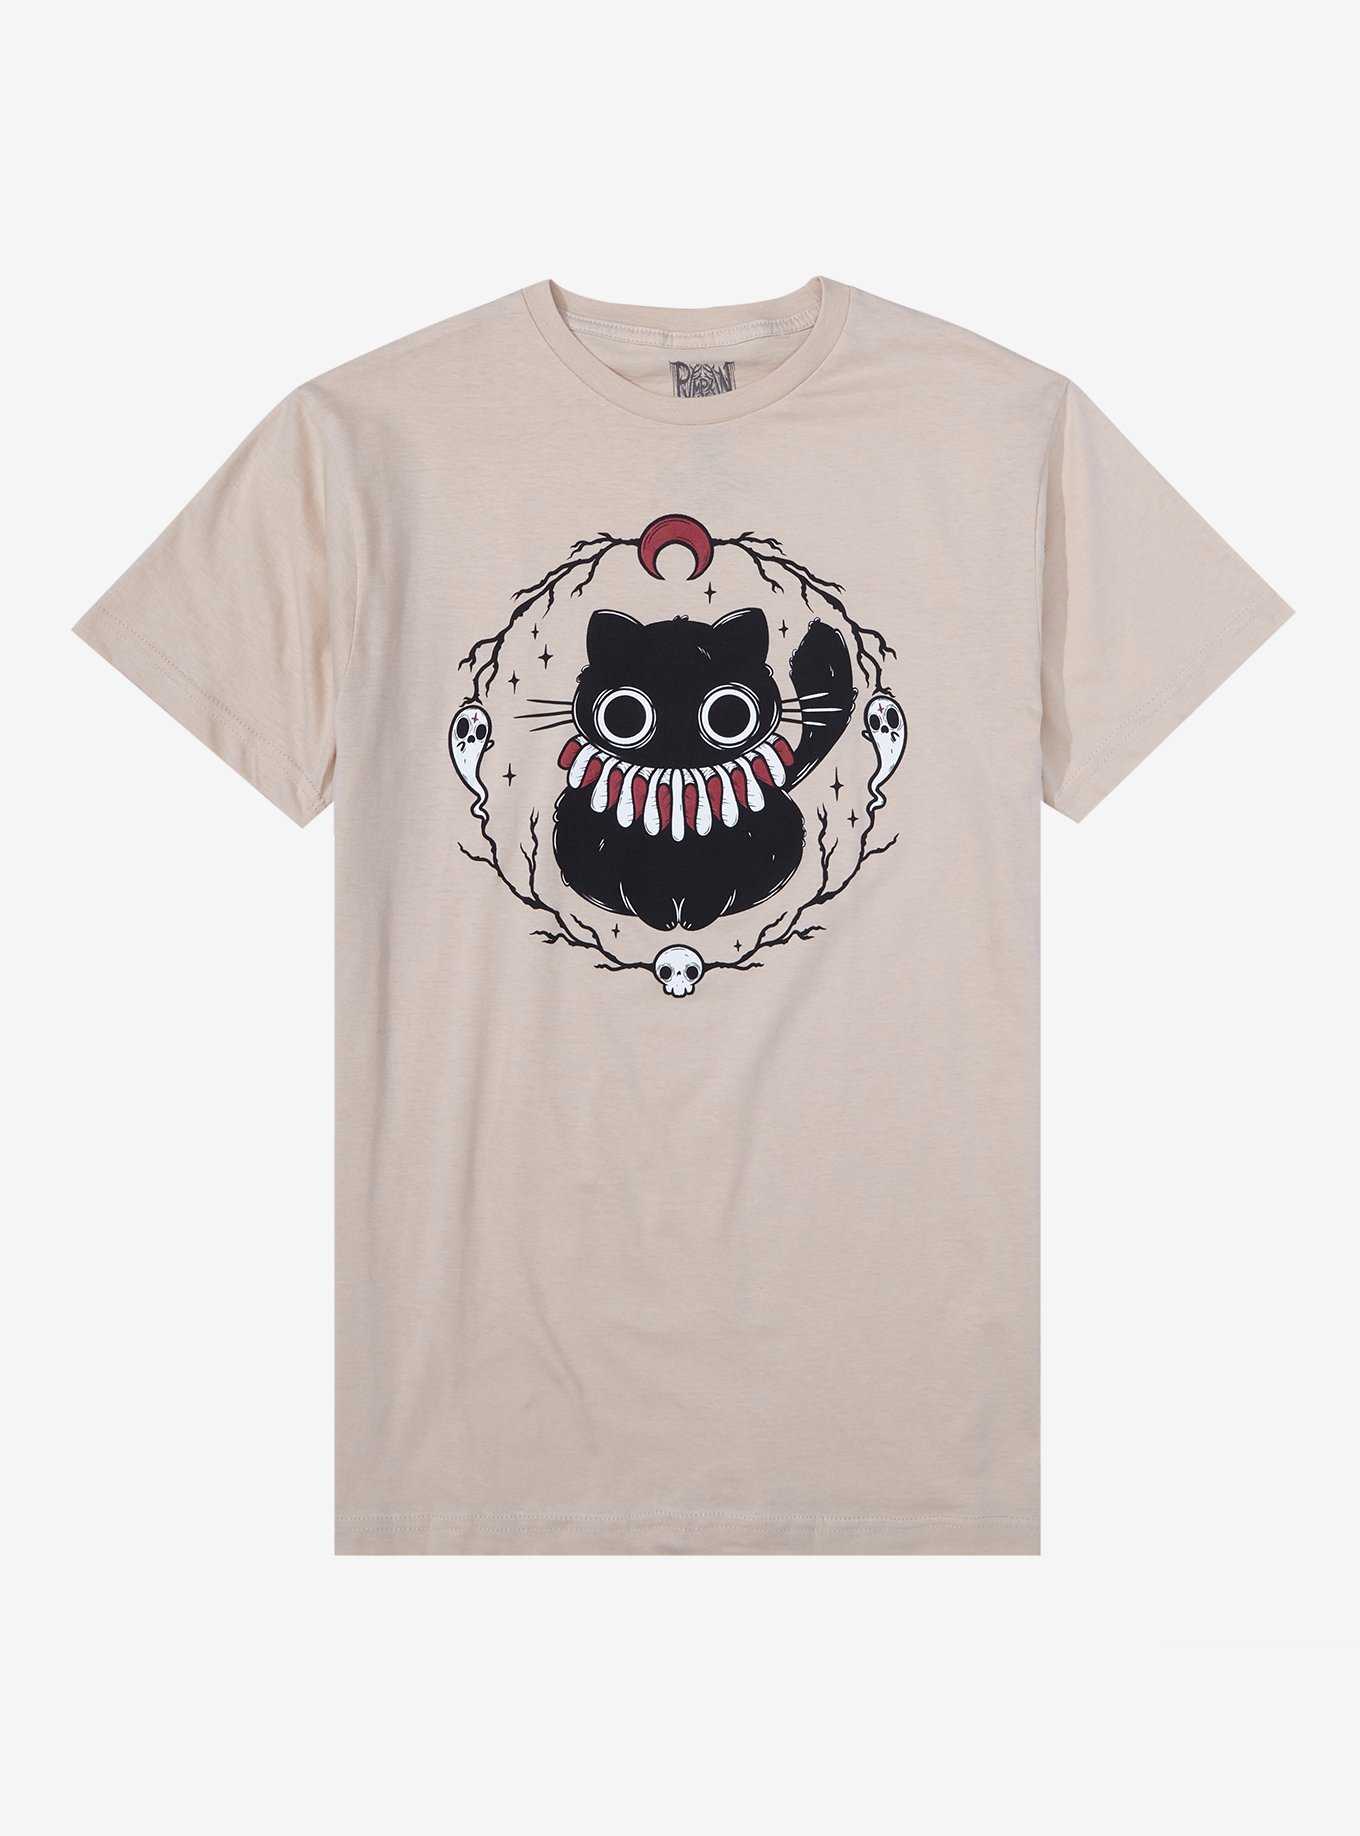 Clown Cat Voidling T-Shirt By Pvmpkin Art, , hi-res